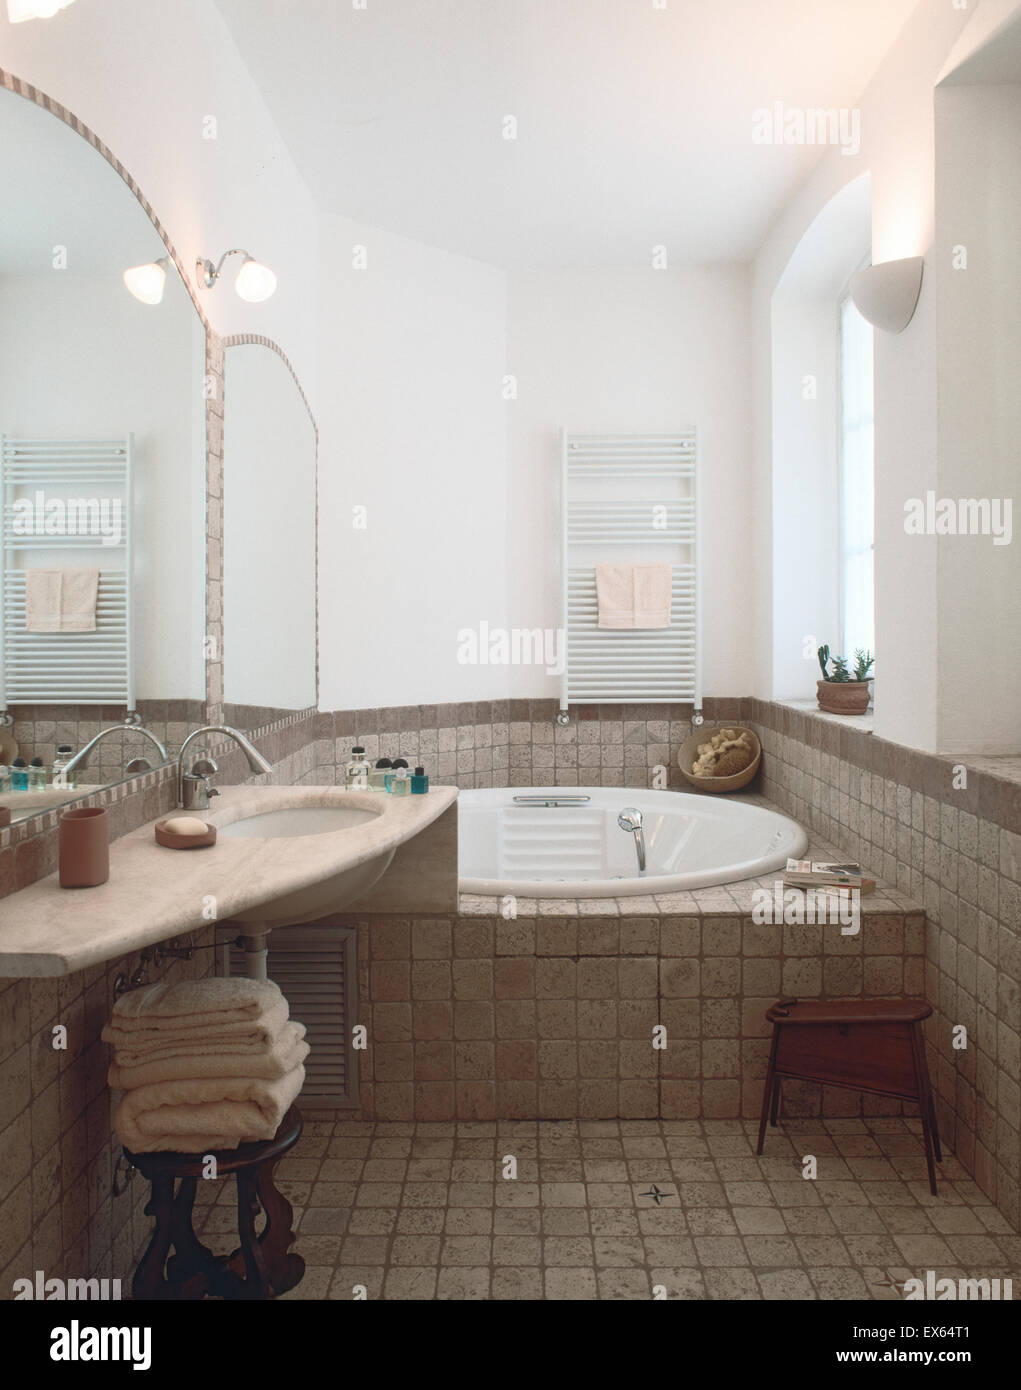 interior view of classic bathroom with tile floor overlooking on bathtub Stock Photo